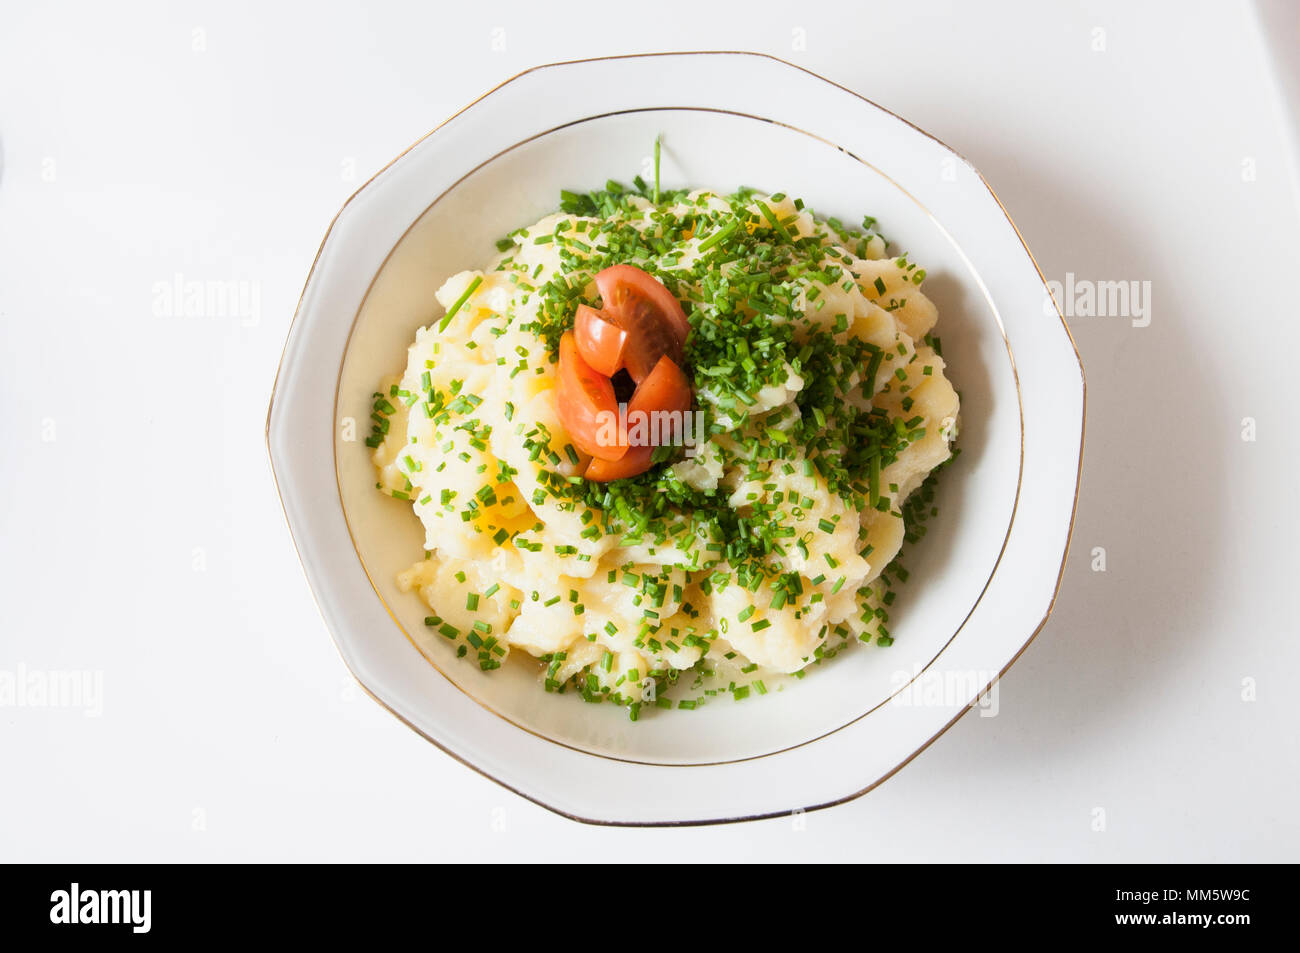 Potato salad with parsley and tomato Stock Photo